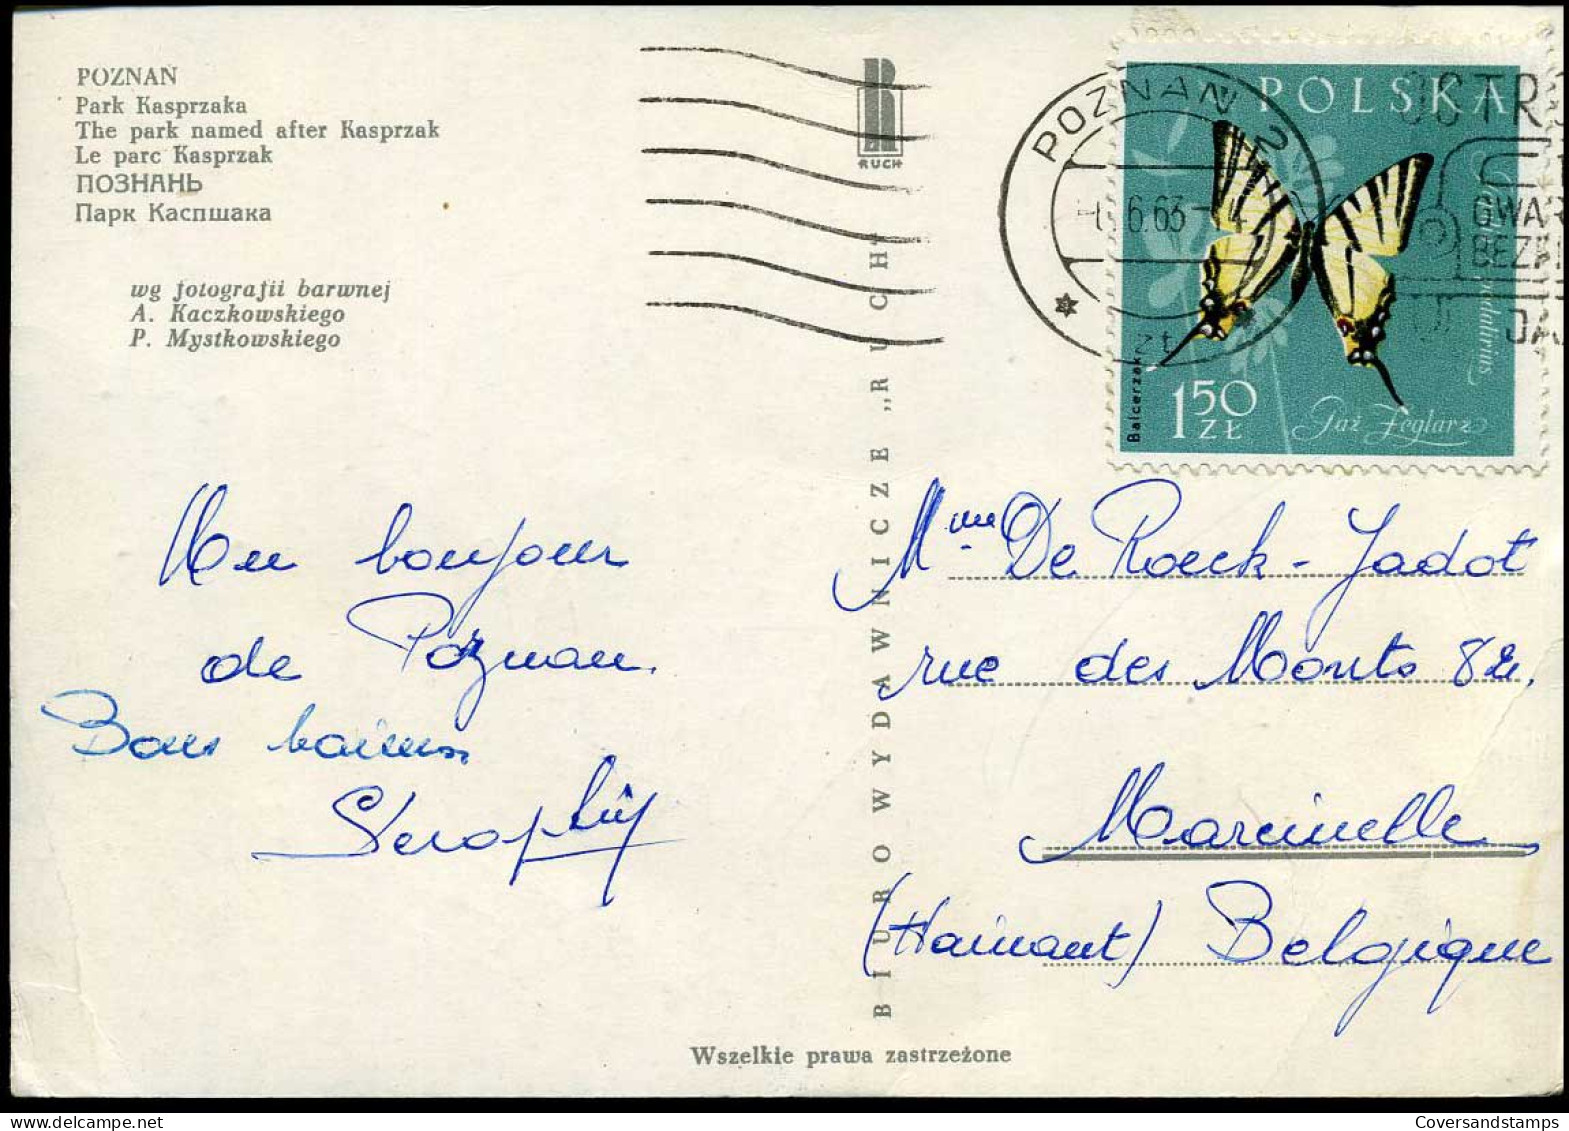 Post Card To Marcinelle, Belgium - Storia Postale